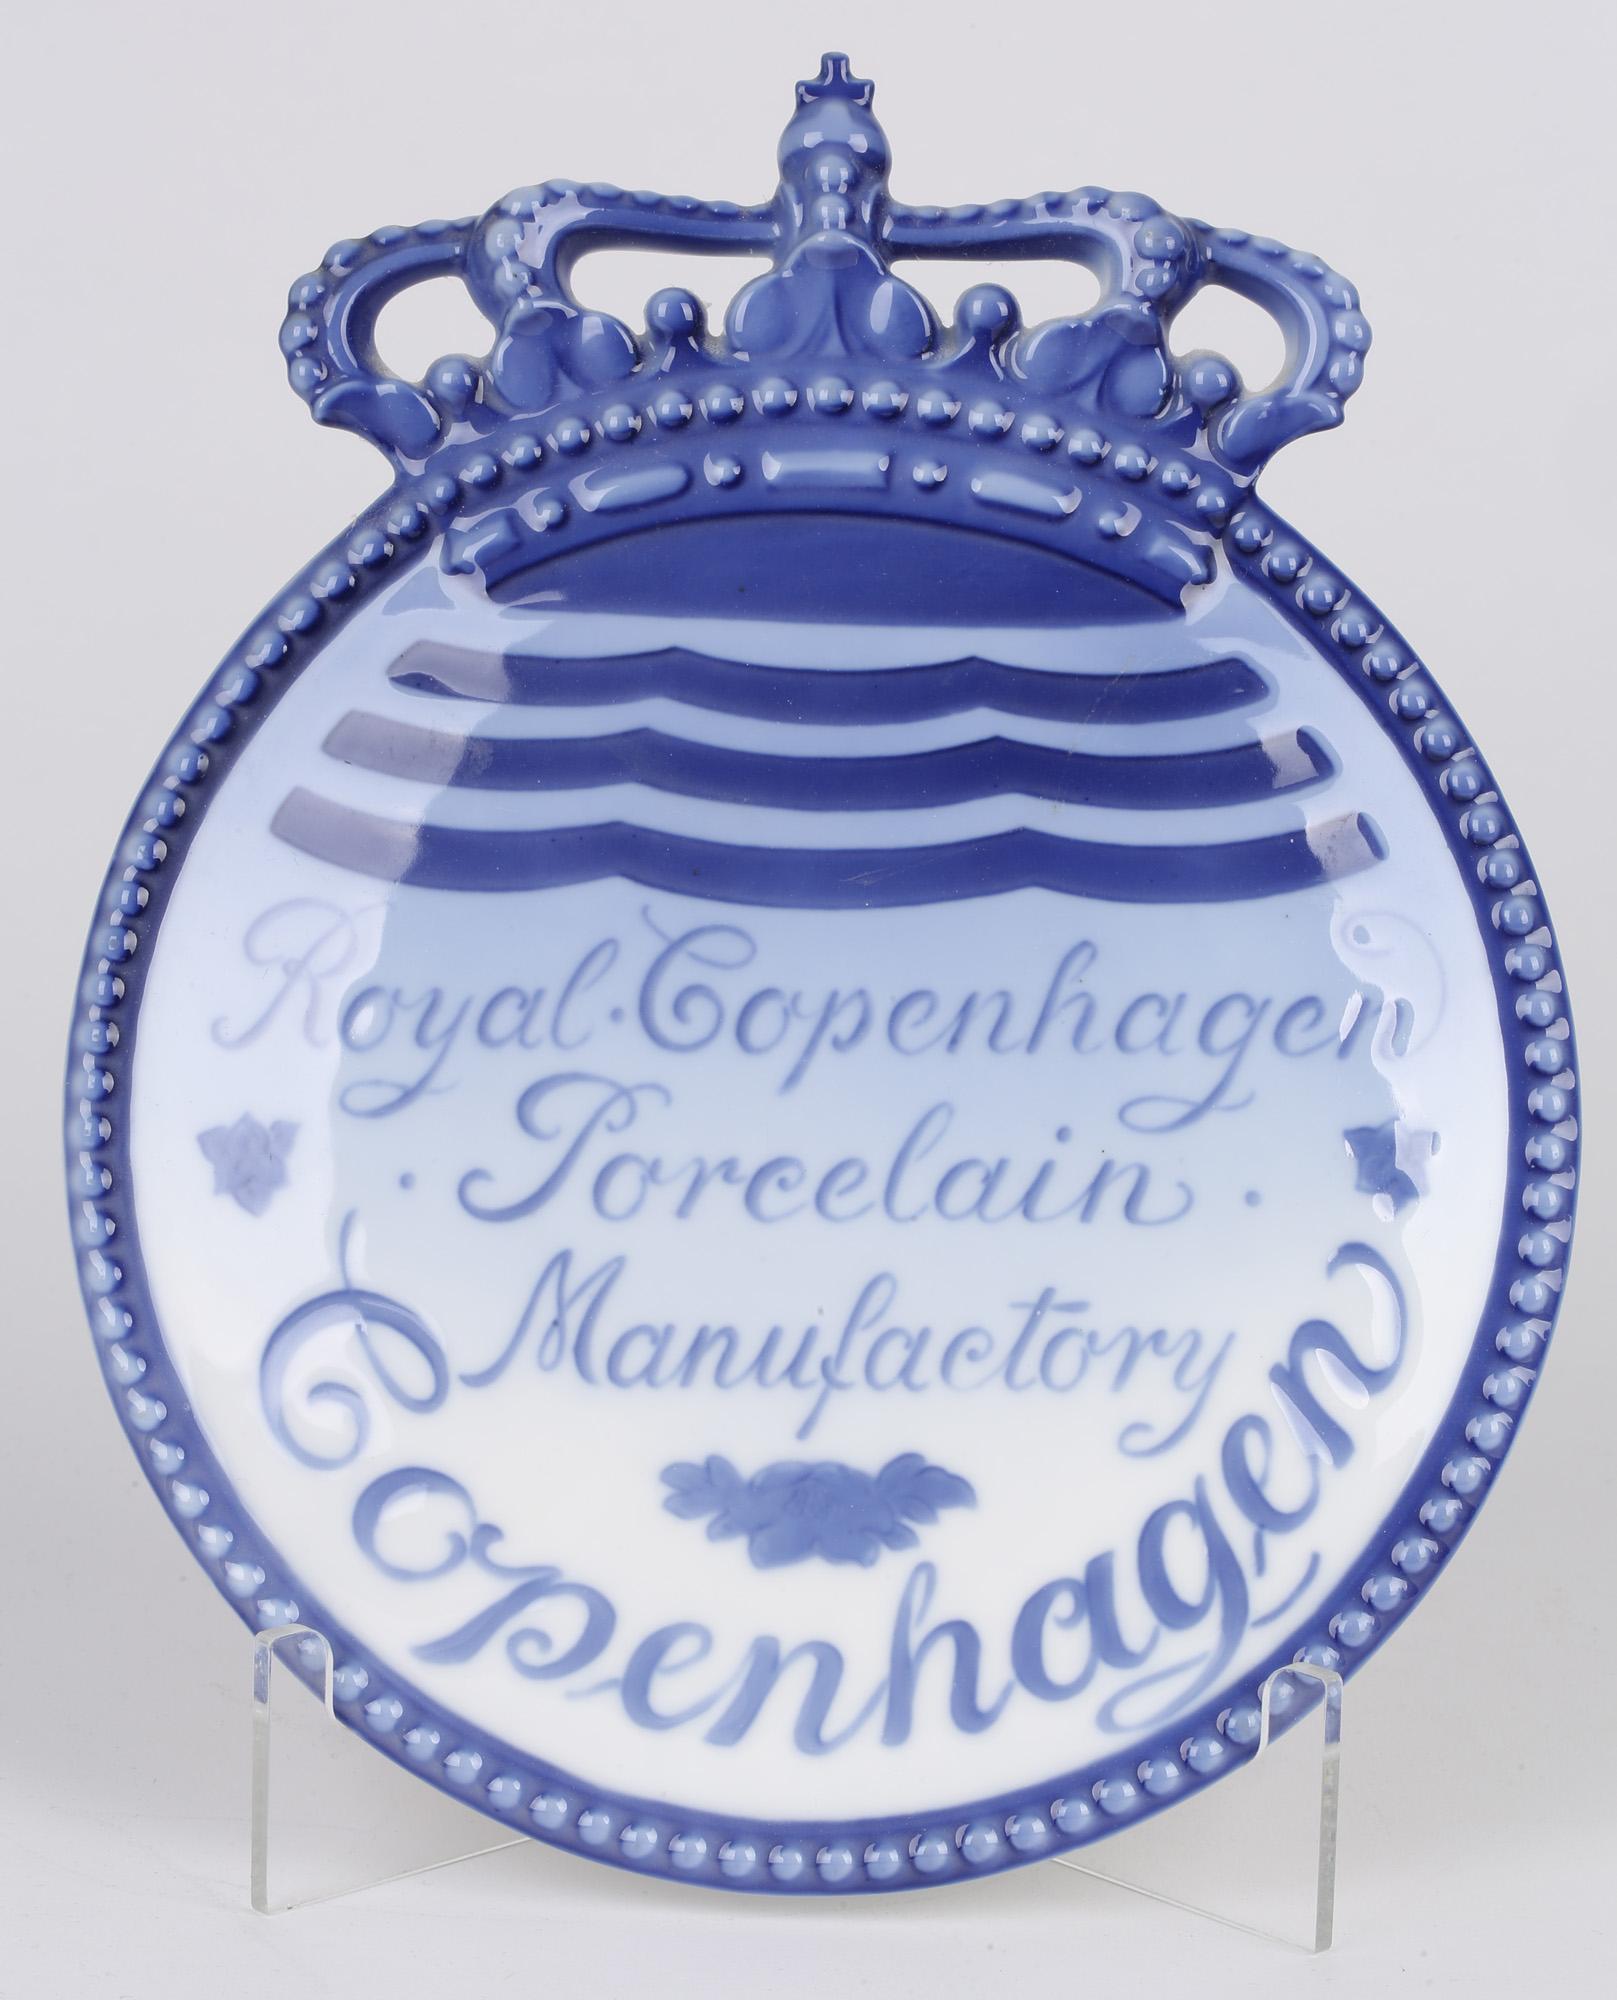 Glazed Royal Copenhagen Porcelain Manufactory Advertising Plaque